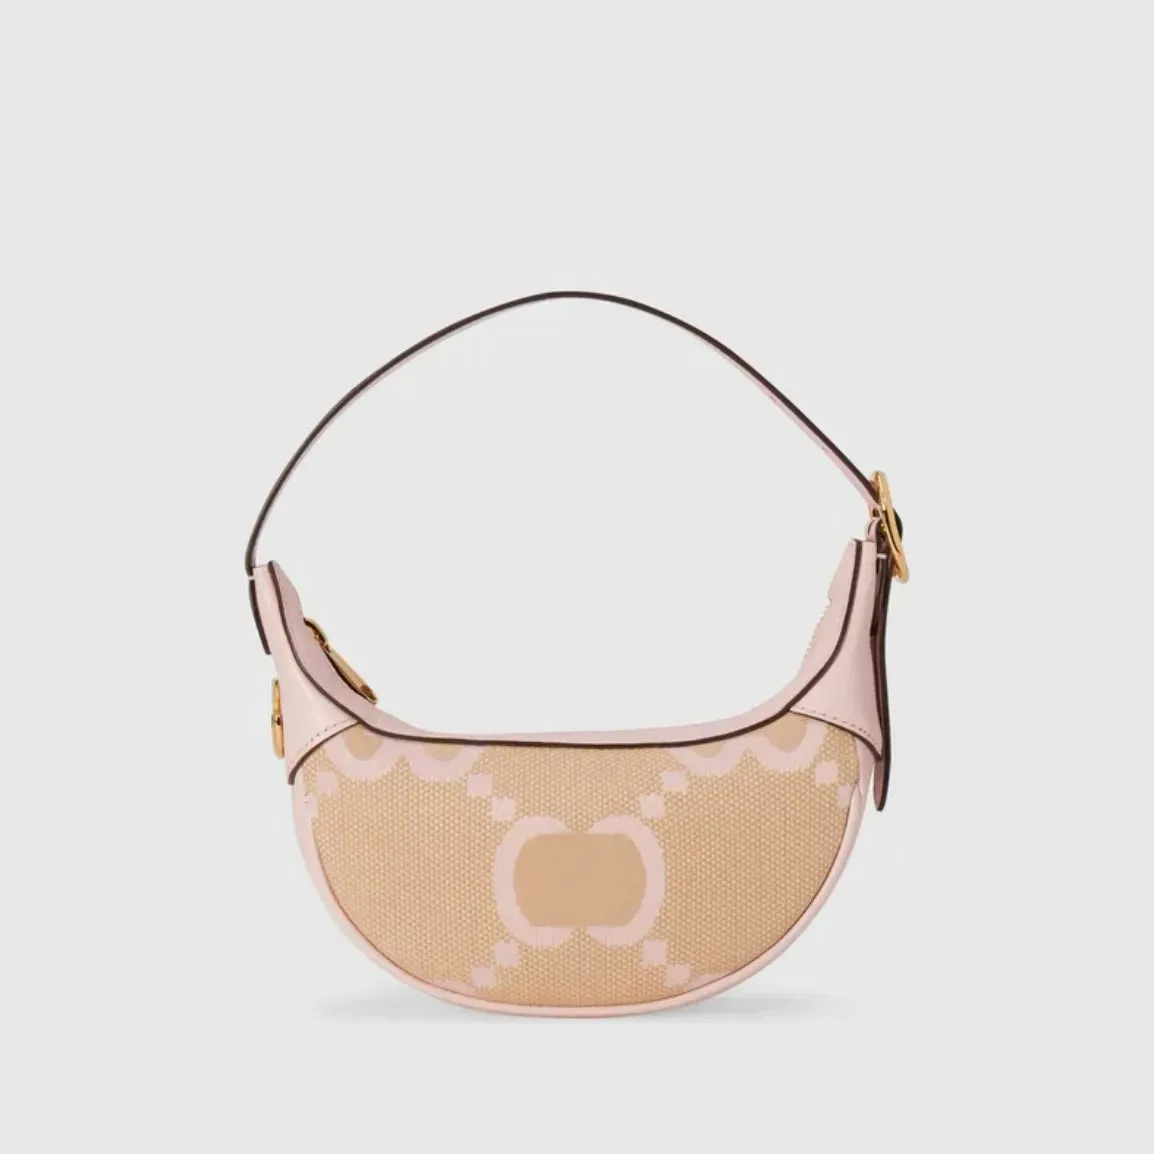 Designer Hobo bag Underarm bag 2G Luxury Brand Totes Handbag Shoulder bags Canvas Women Wallet purse Crossbody bag with Logo and Original box 5A+ Top Quality 55